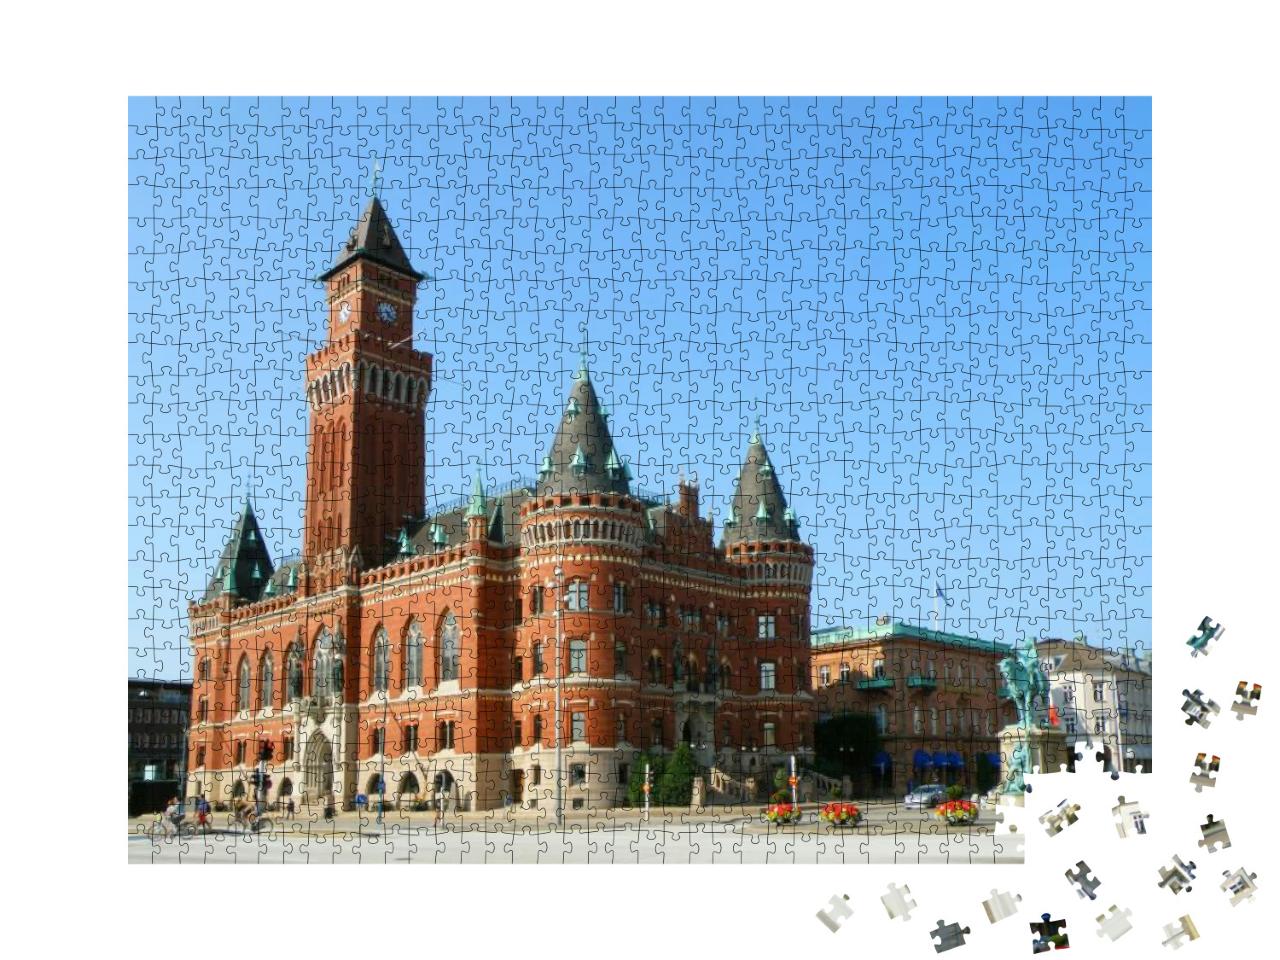 Helsingborg City Hall, Gorgeous Landmark of Helsingborg... Jigsaw Puzzle with 1000 pieces